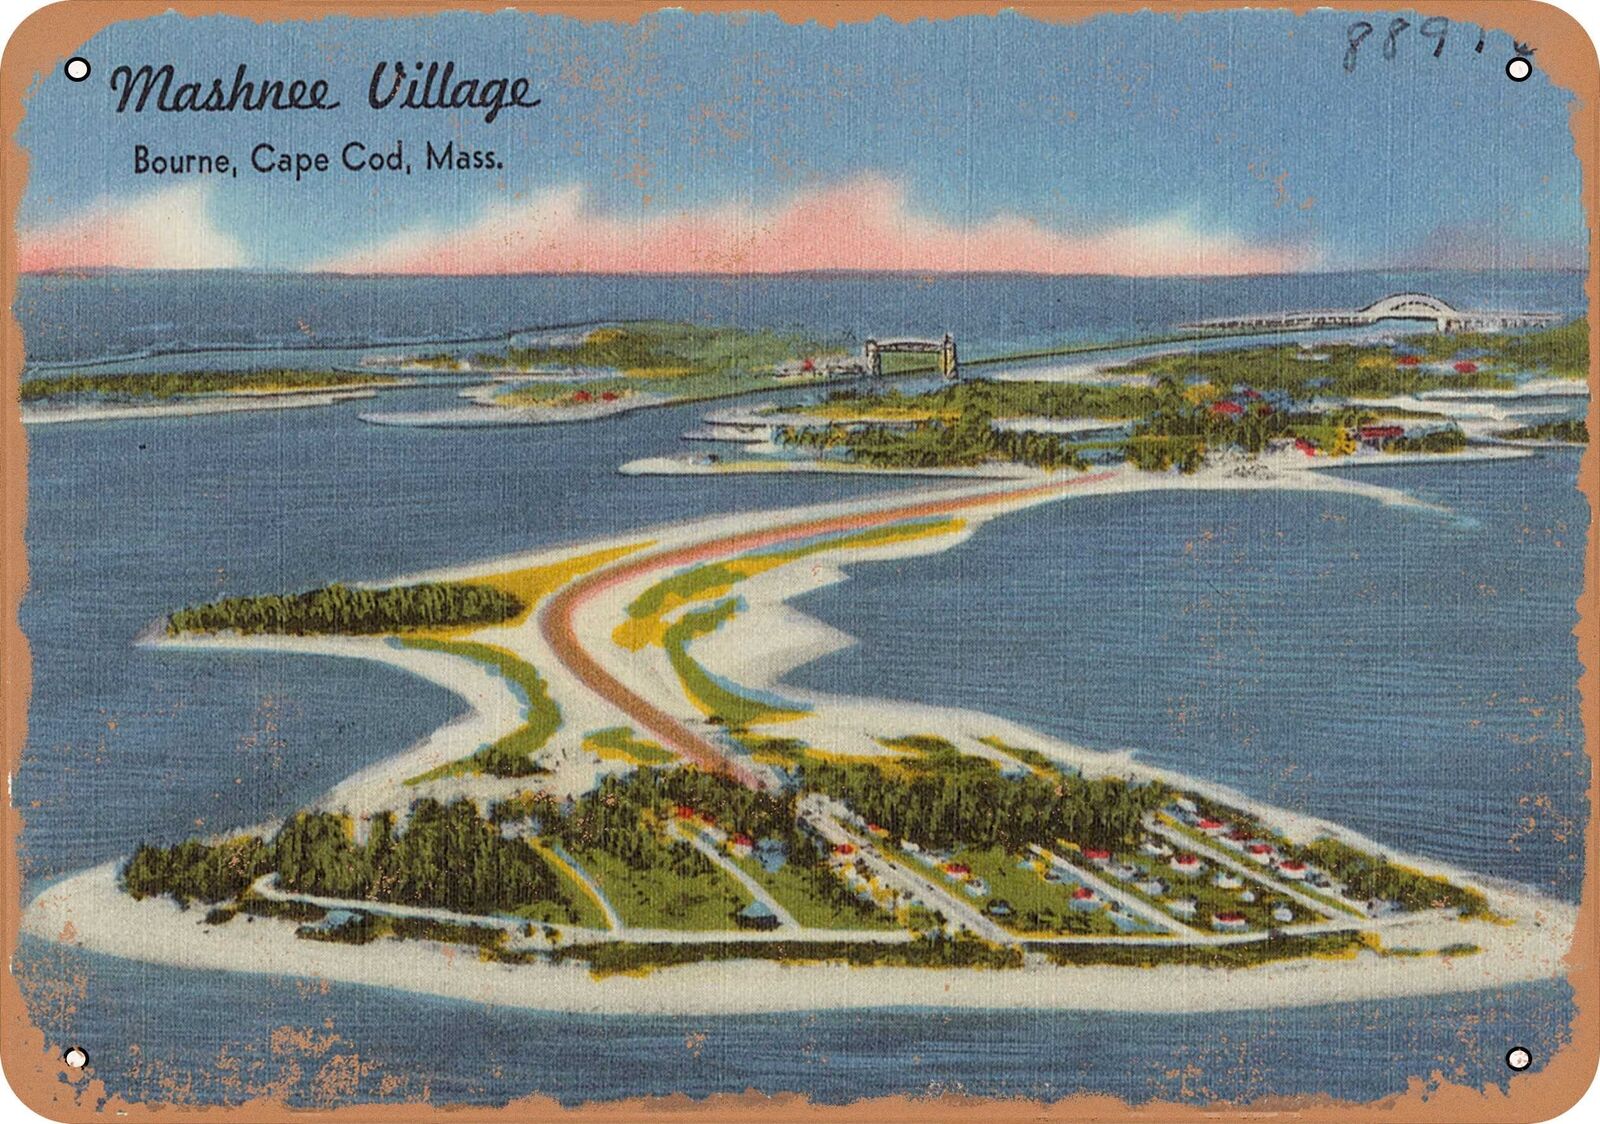 Metal Sign - Massachusetts Postcard - Mashnee Village, Bourne, Cape Cod, Mass.